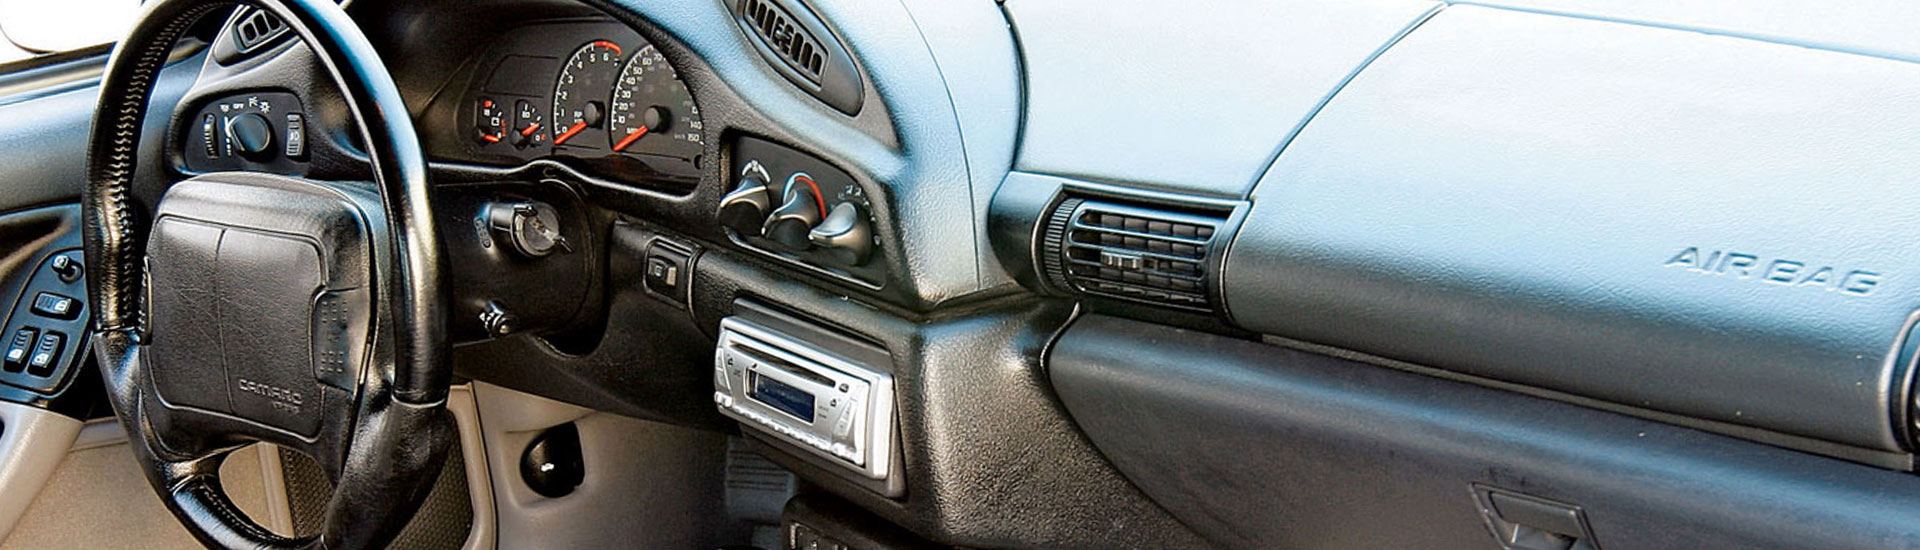 1994 Chevrolet Camaro Dash Kits